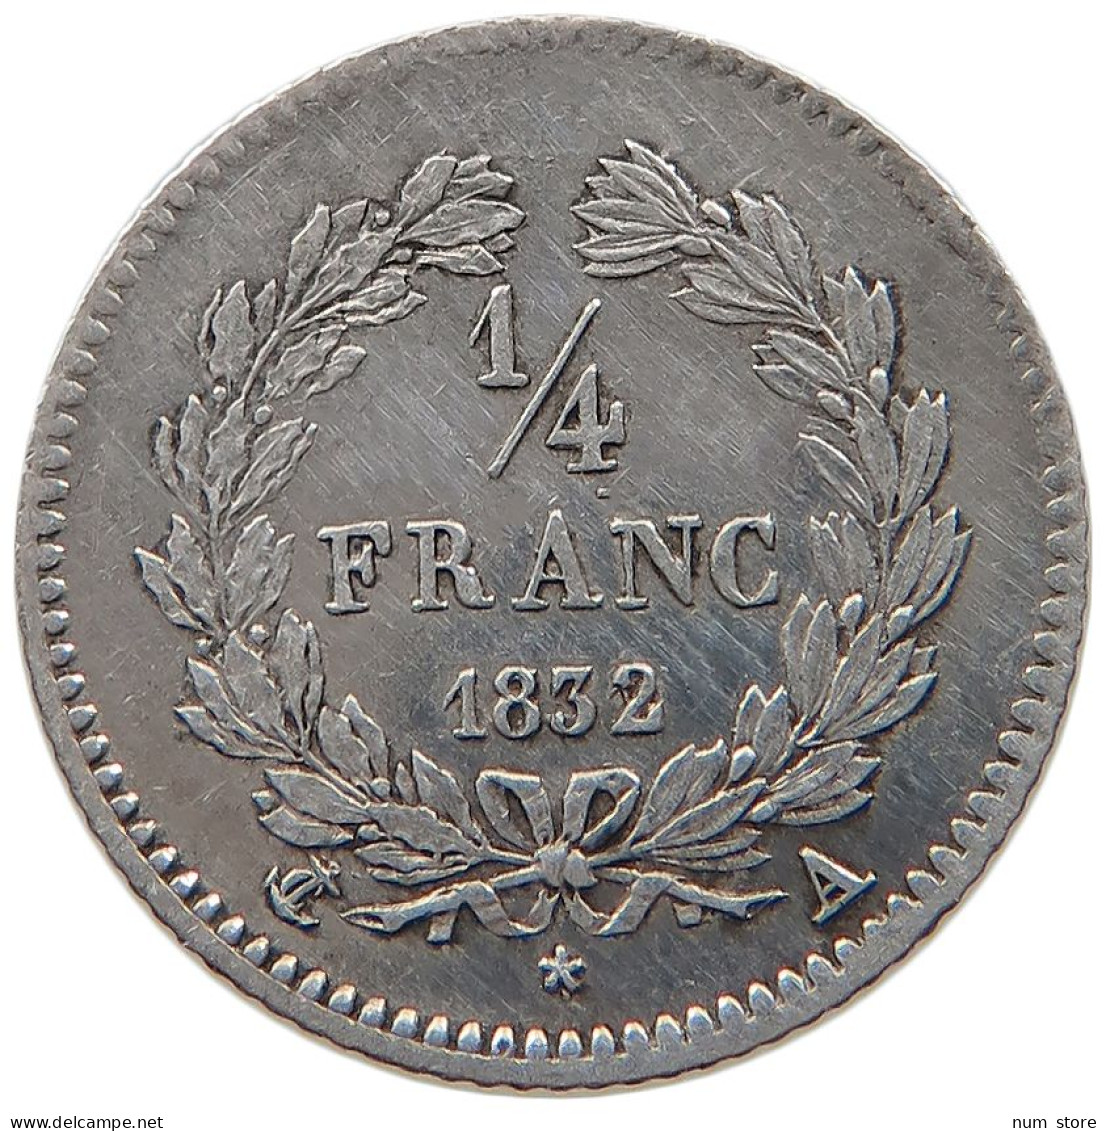 FRANCE 1/4 FRANC 1832 A LOUIS PHILIPPE I. (1830-1848) #t143 0645 - 1/4 Franc